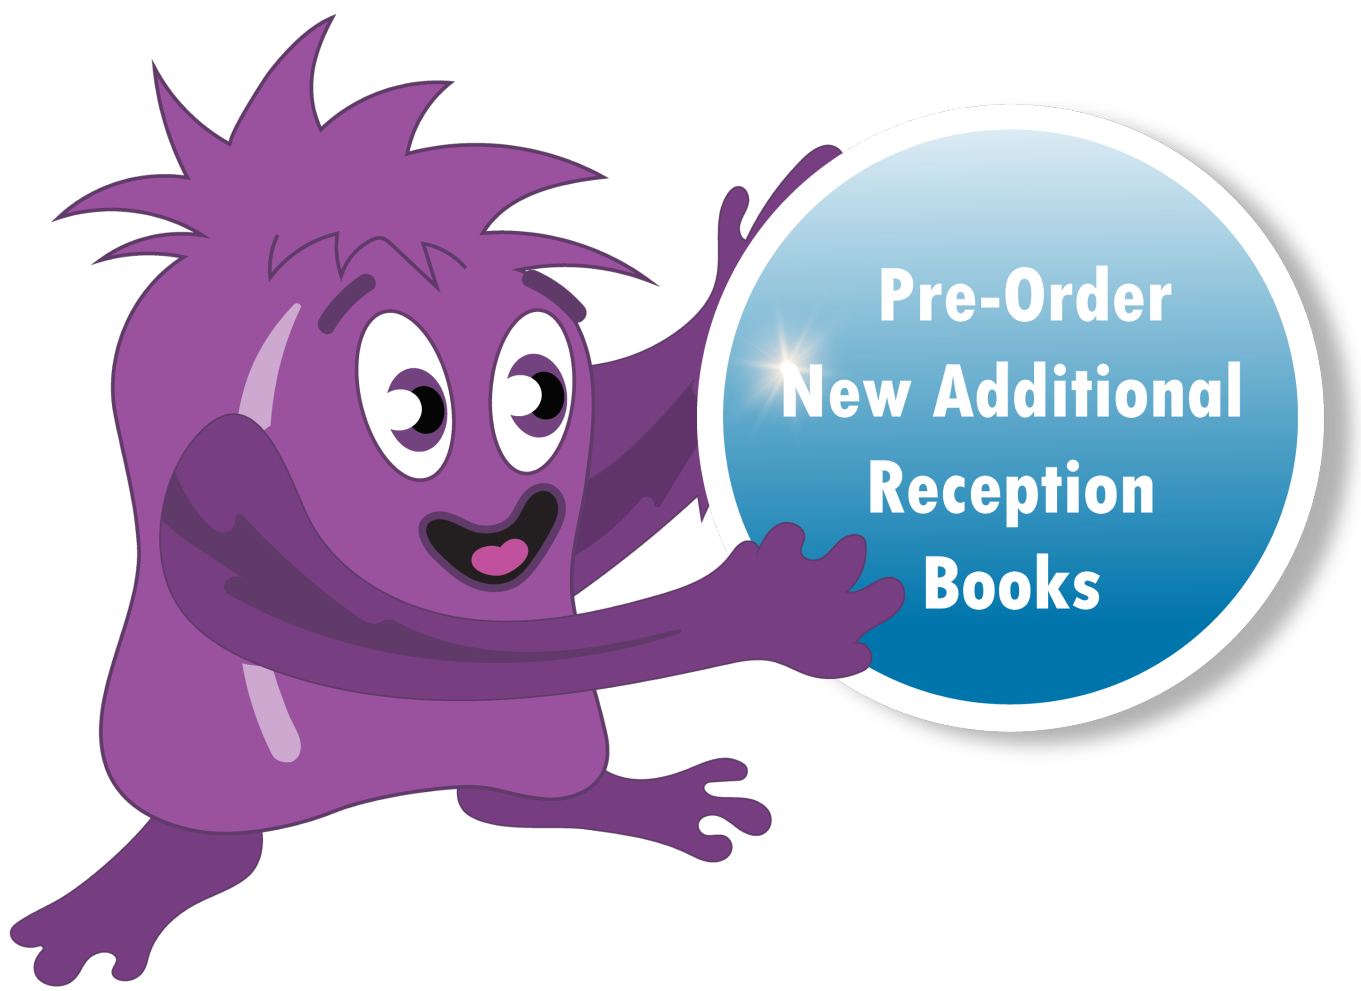 Pre-Order New Additional Reception Books